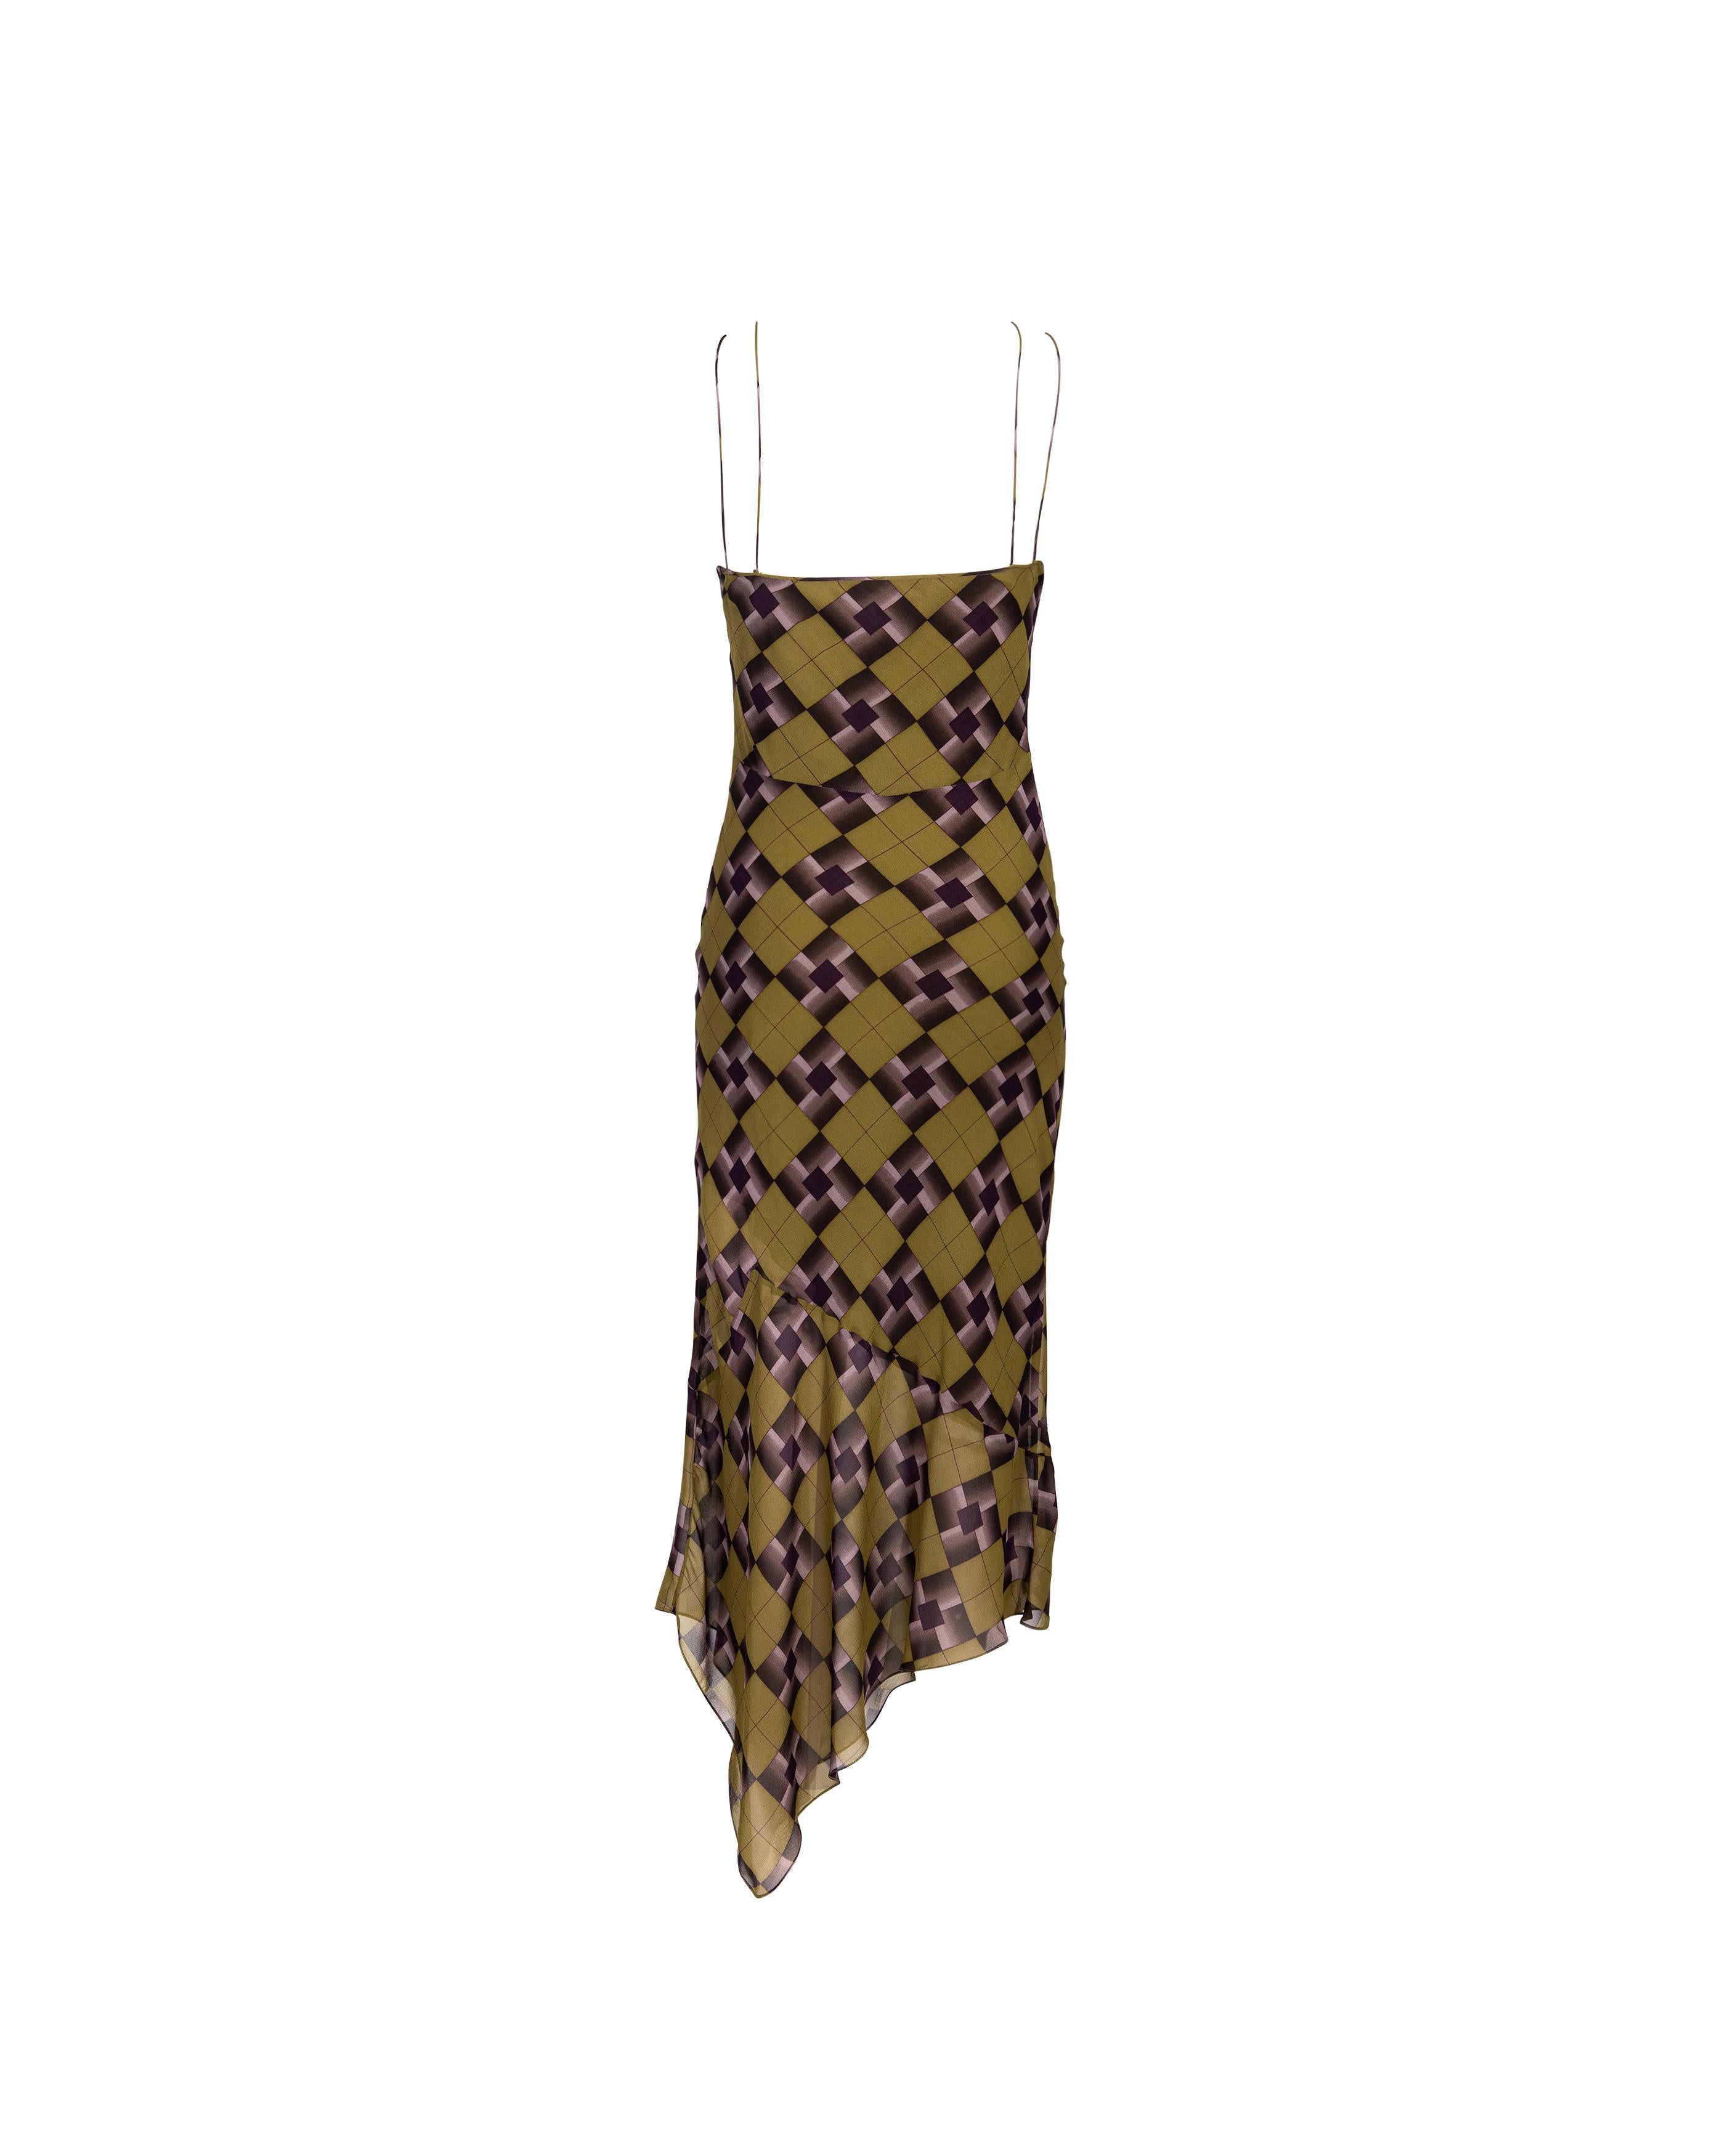 Women's A/W 2001 John Galliano Green and Gray Tartan Silk Chiffon Slip Dress For Sale